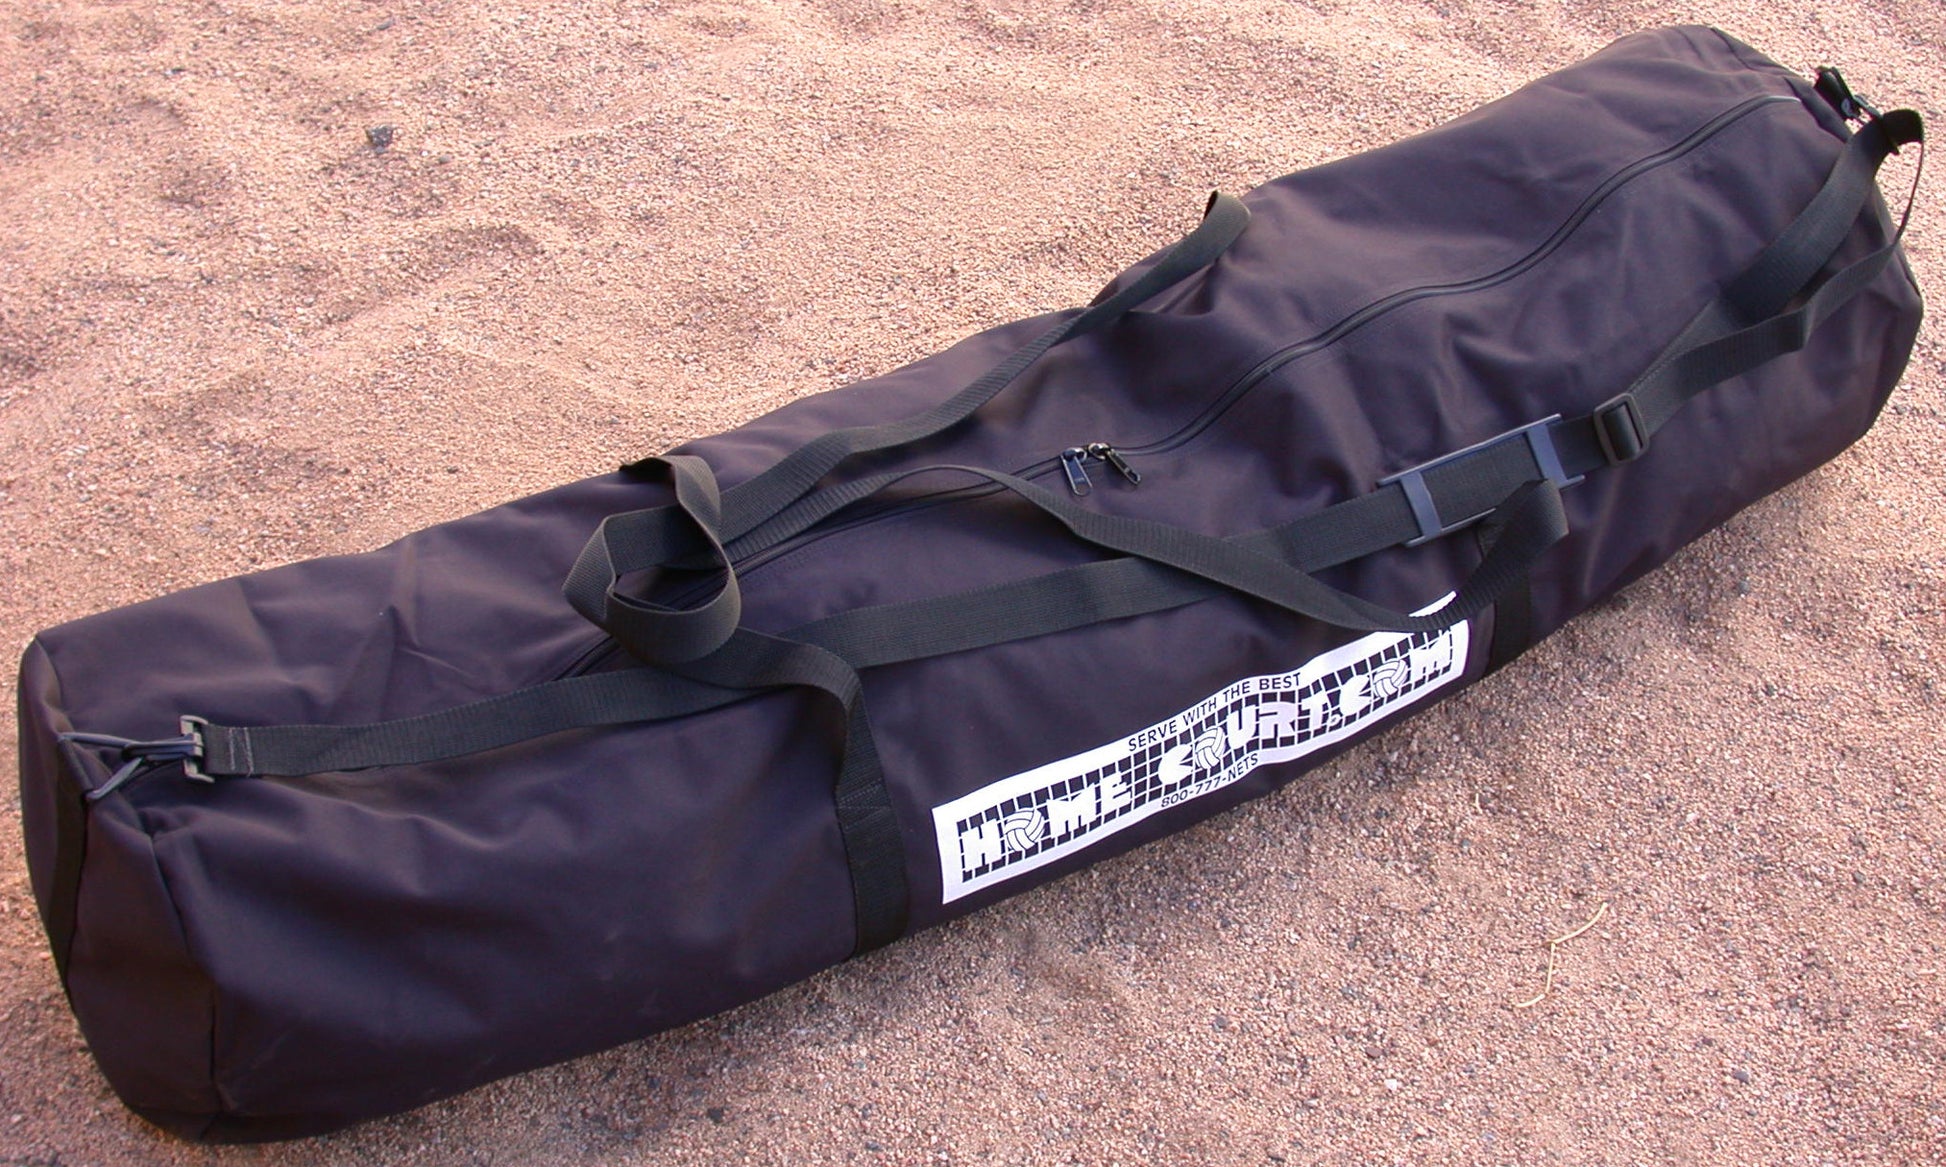 B53-volleyball set 53x13.75-inch long carrying bag, 6x6 black polyester